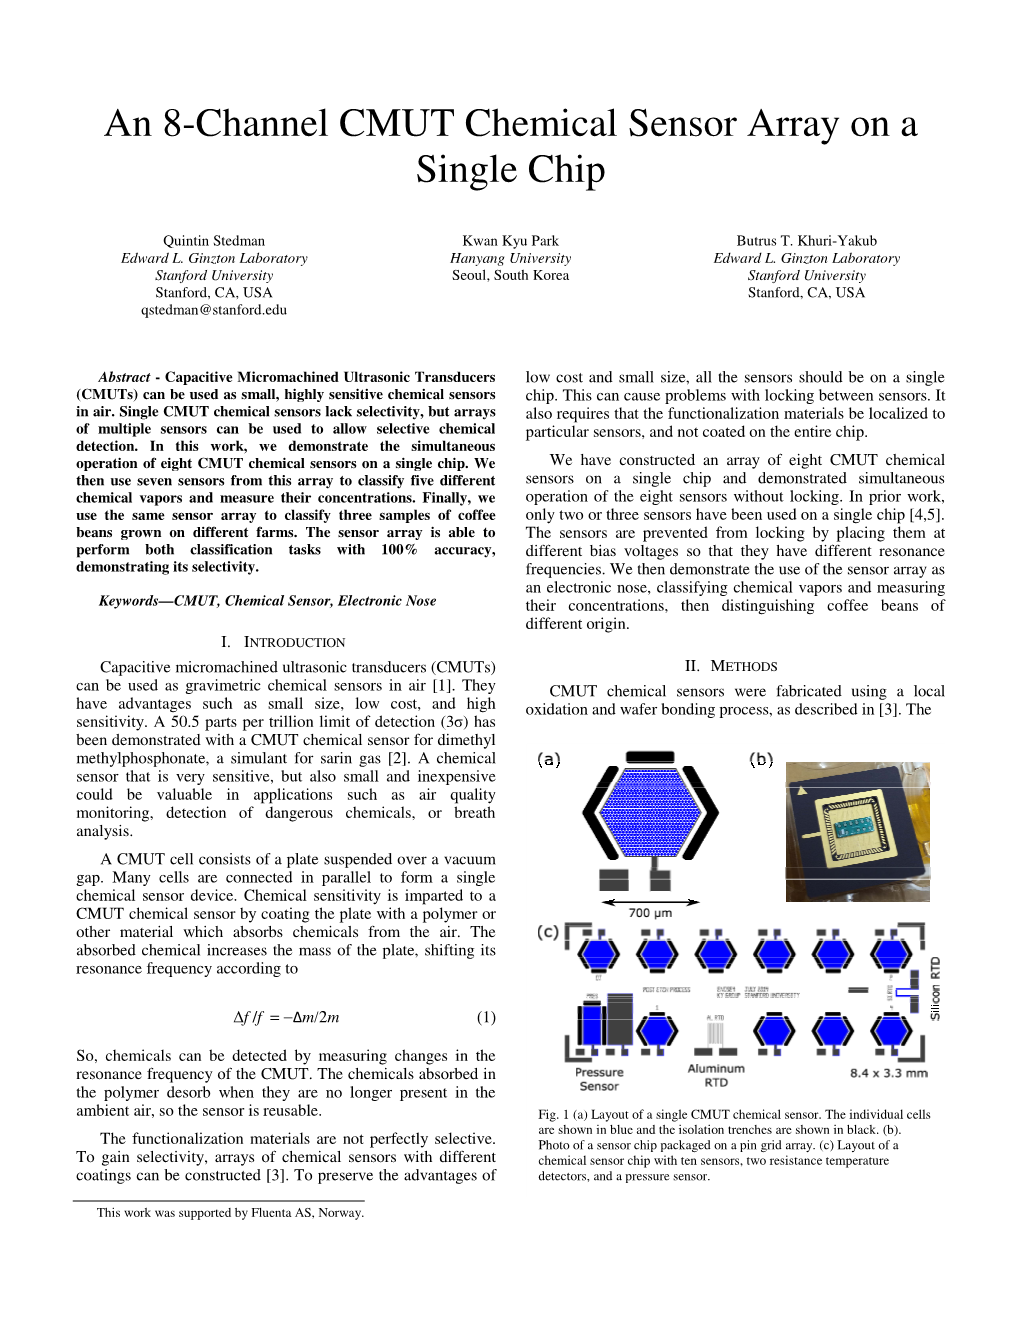 An 8-Channel CMUT Chemical Sensor Array on a Single Chip